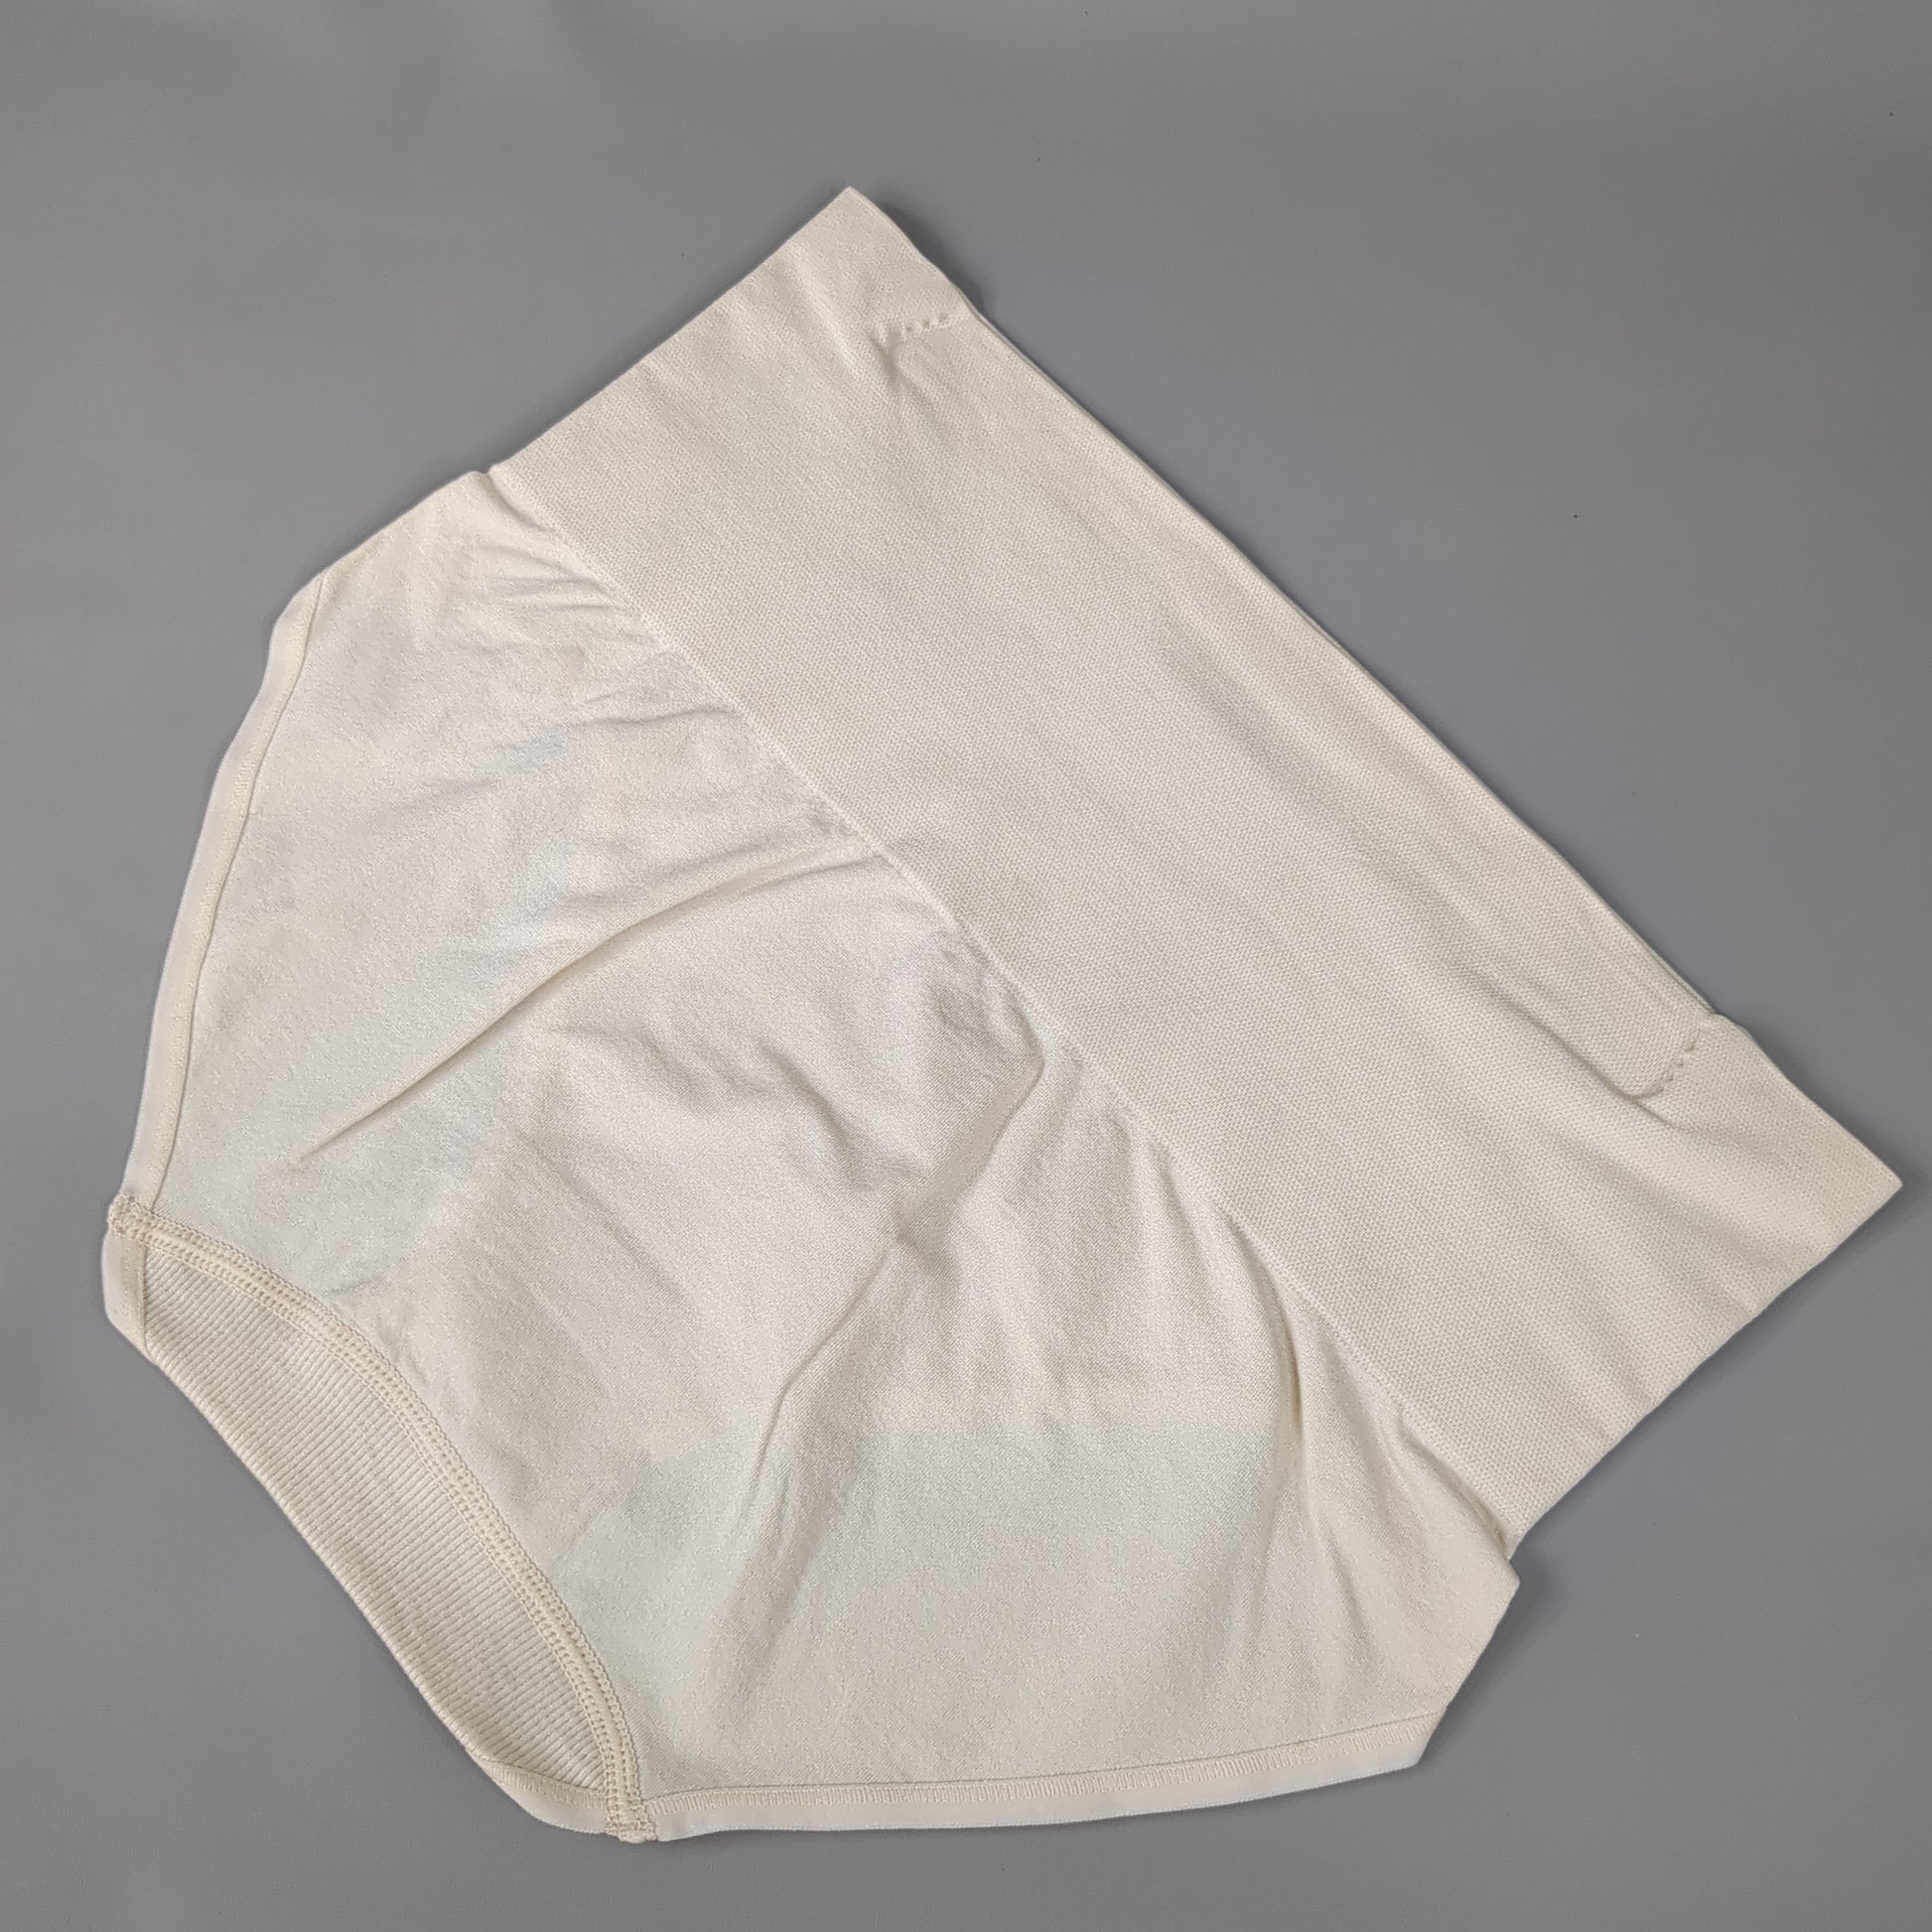 YUMMIE Nylon Brief Women's Underwear Sz L/XL Nude YT6-576 (New